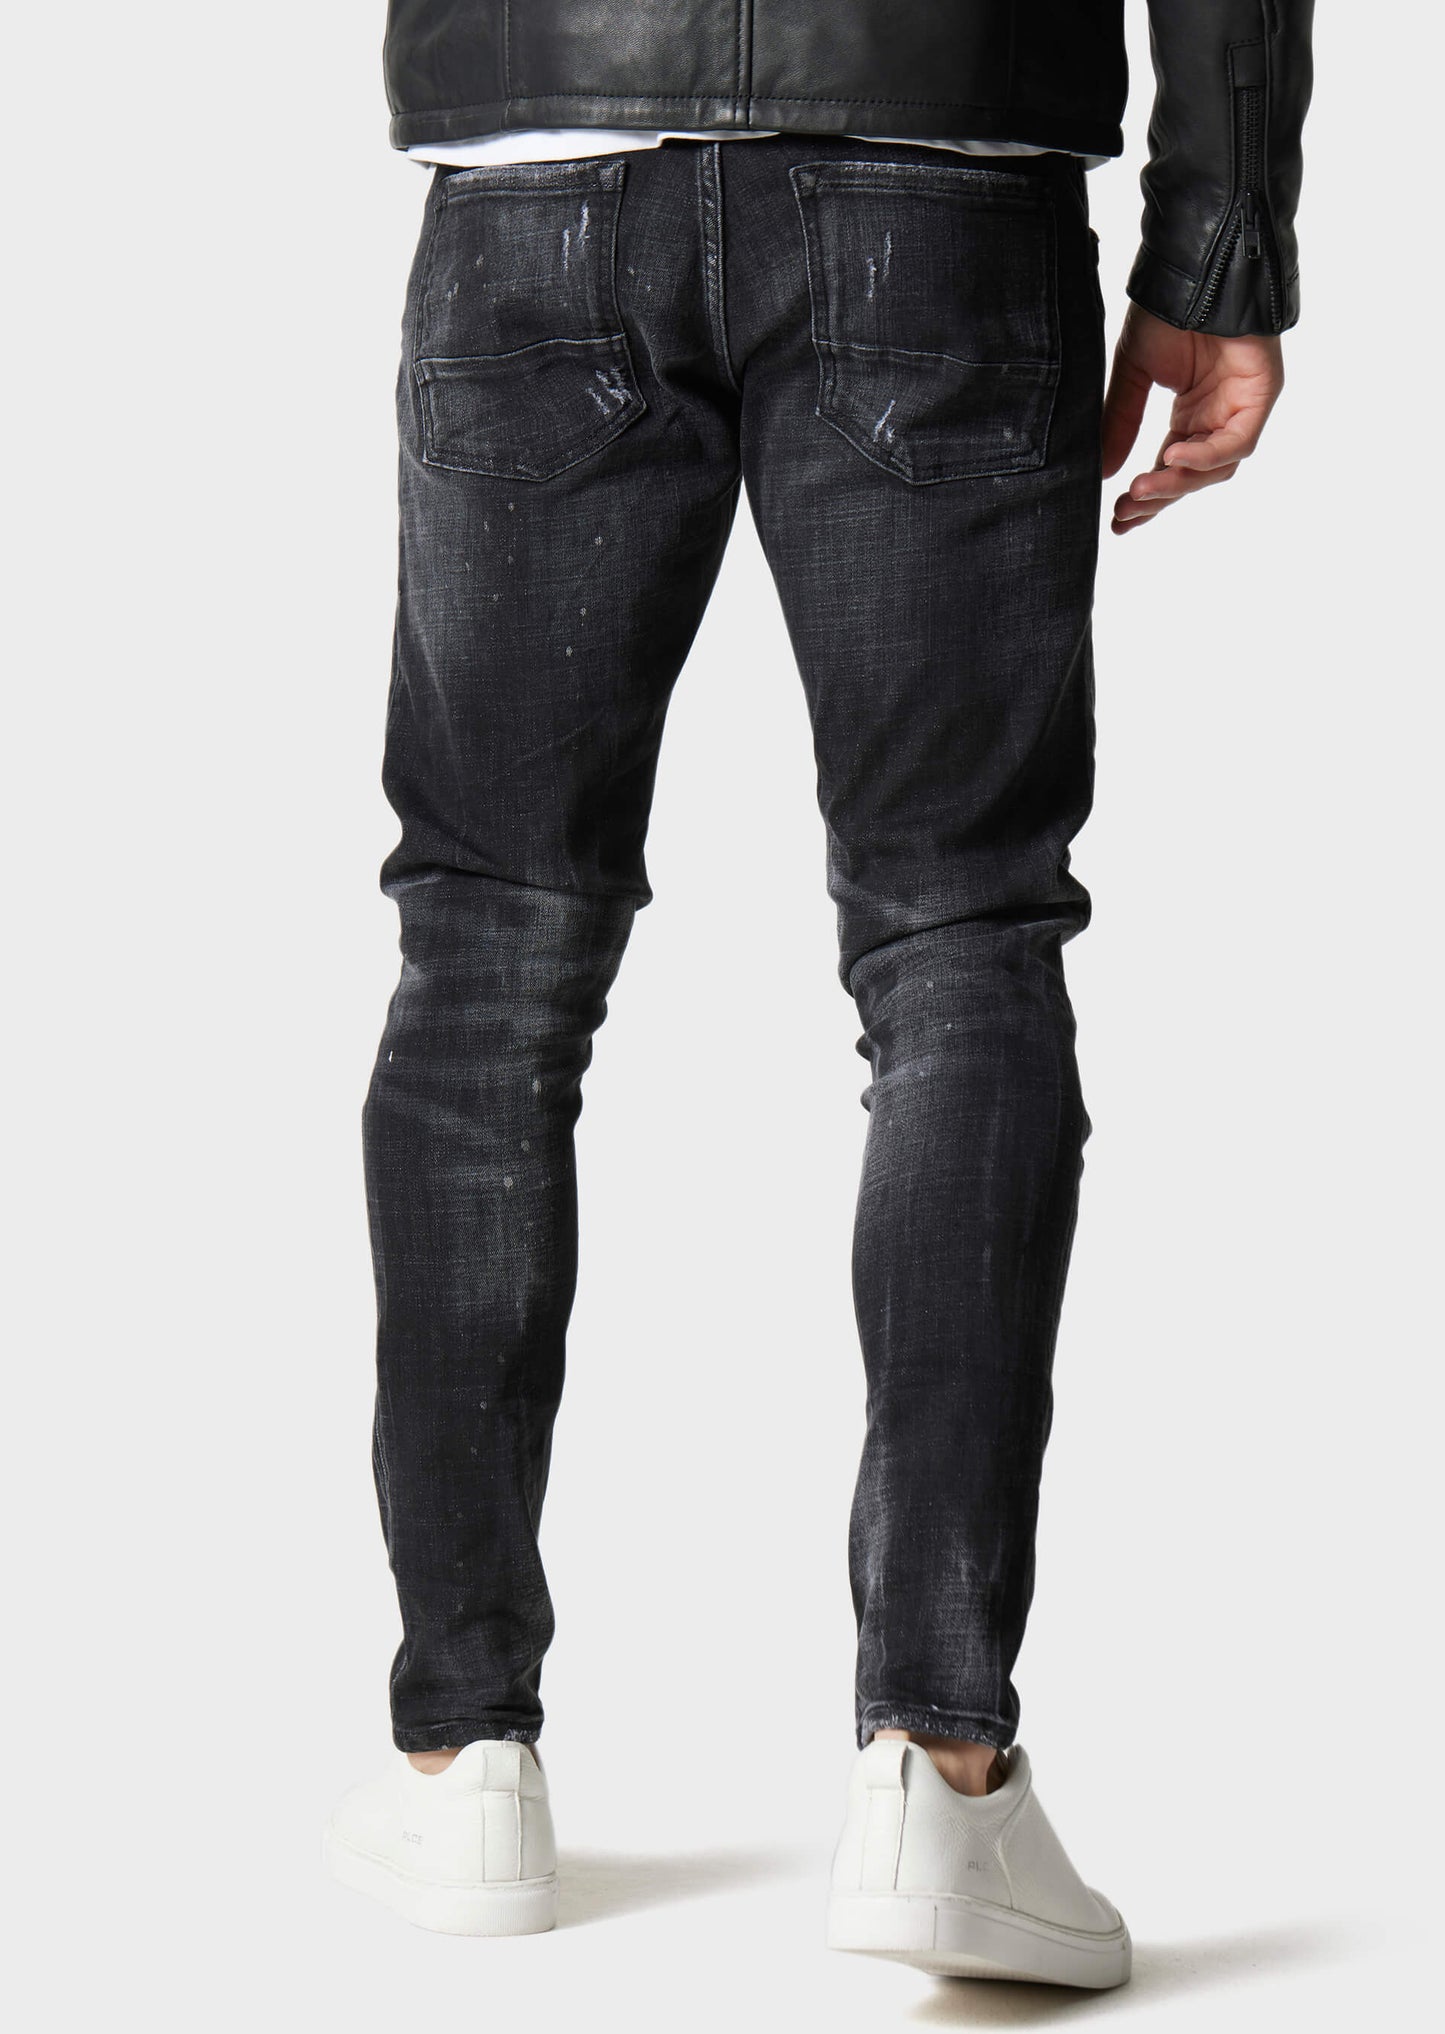 Deniro LAT 786 Slim Fit Jeans